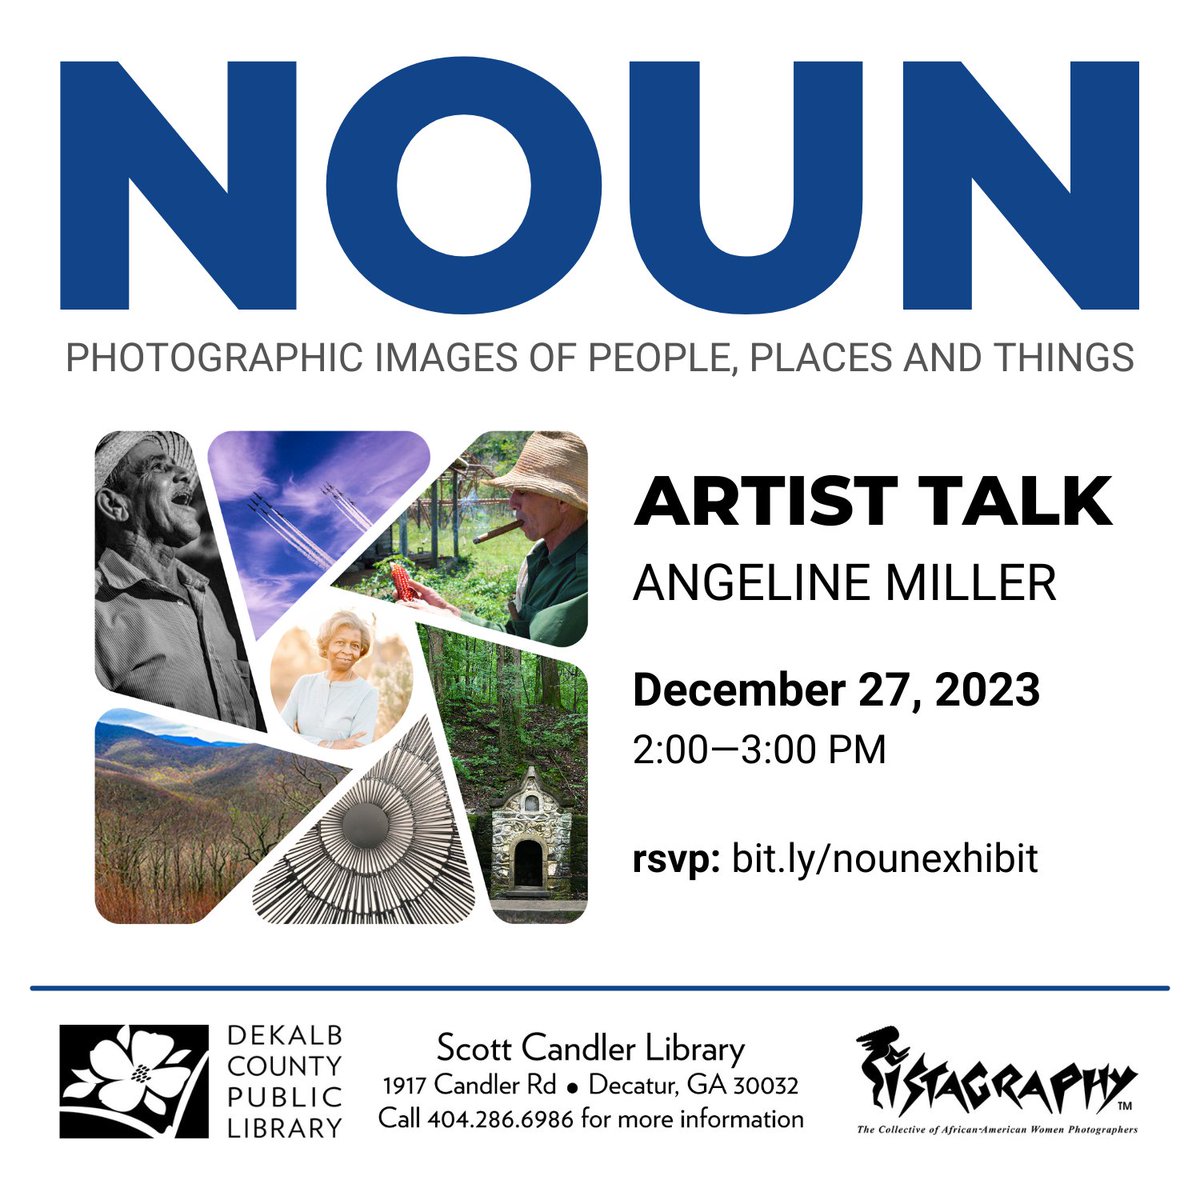 📷 Angeline Miller set for Artist Talk at Scott Candler Library on 12.27.23 at 2:00 PM | #AngelineMiller • #sistagraphy • #NOUNexhibit • #georgialibraries • #dekalblibrary